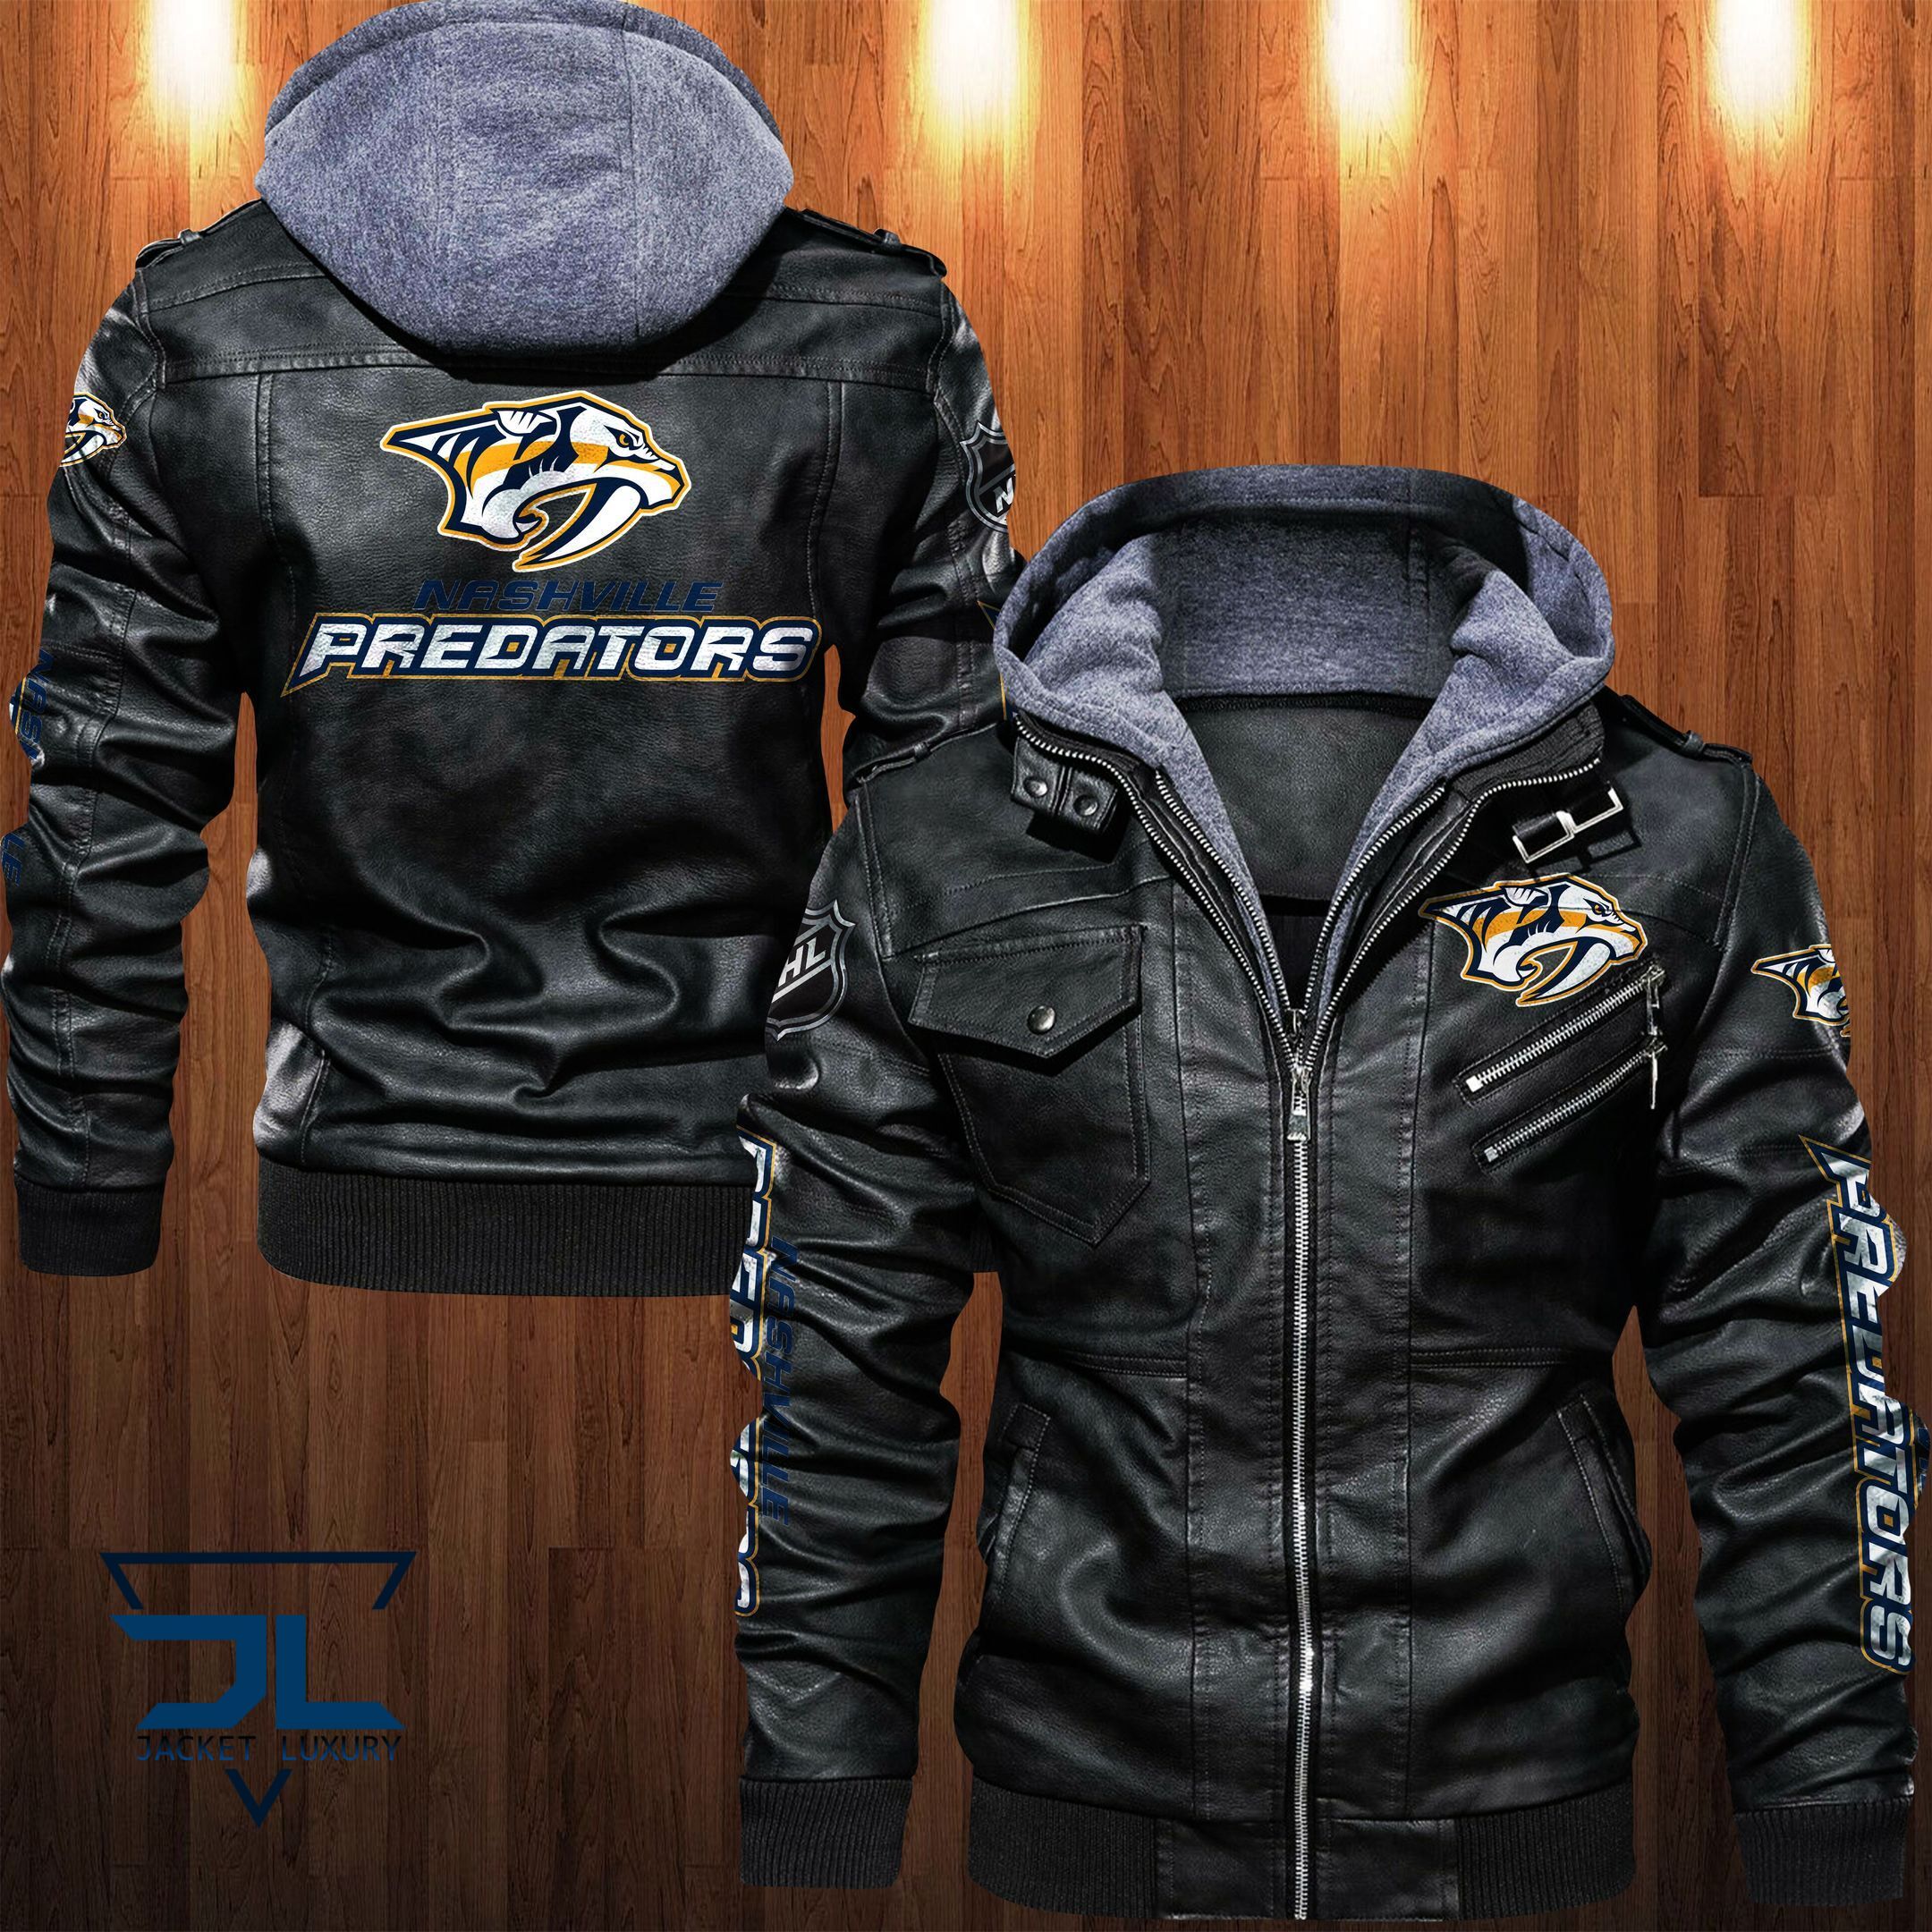 What Leather jacket Sells Best on Techcomshop? 197